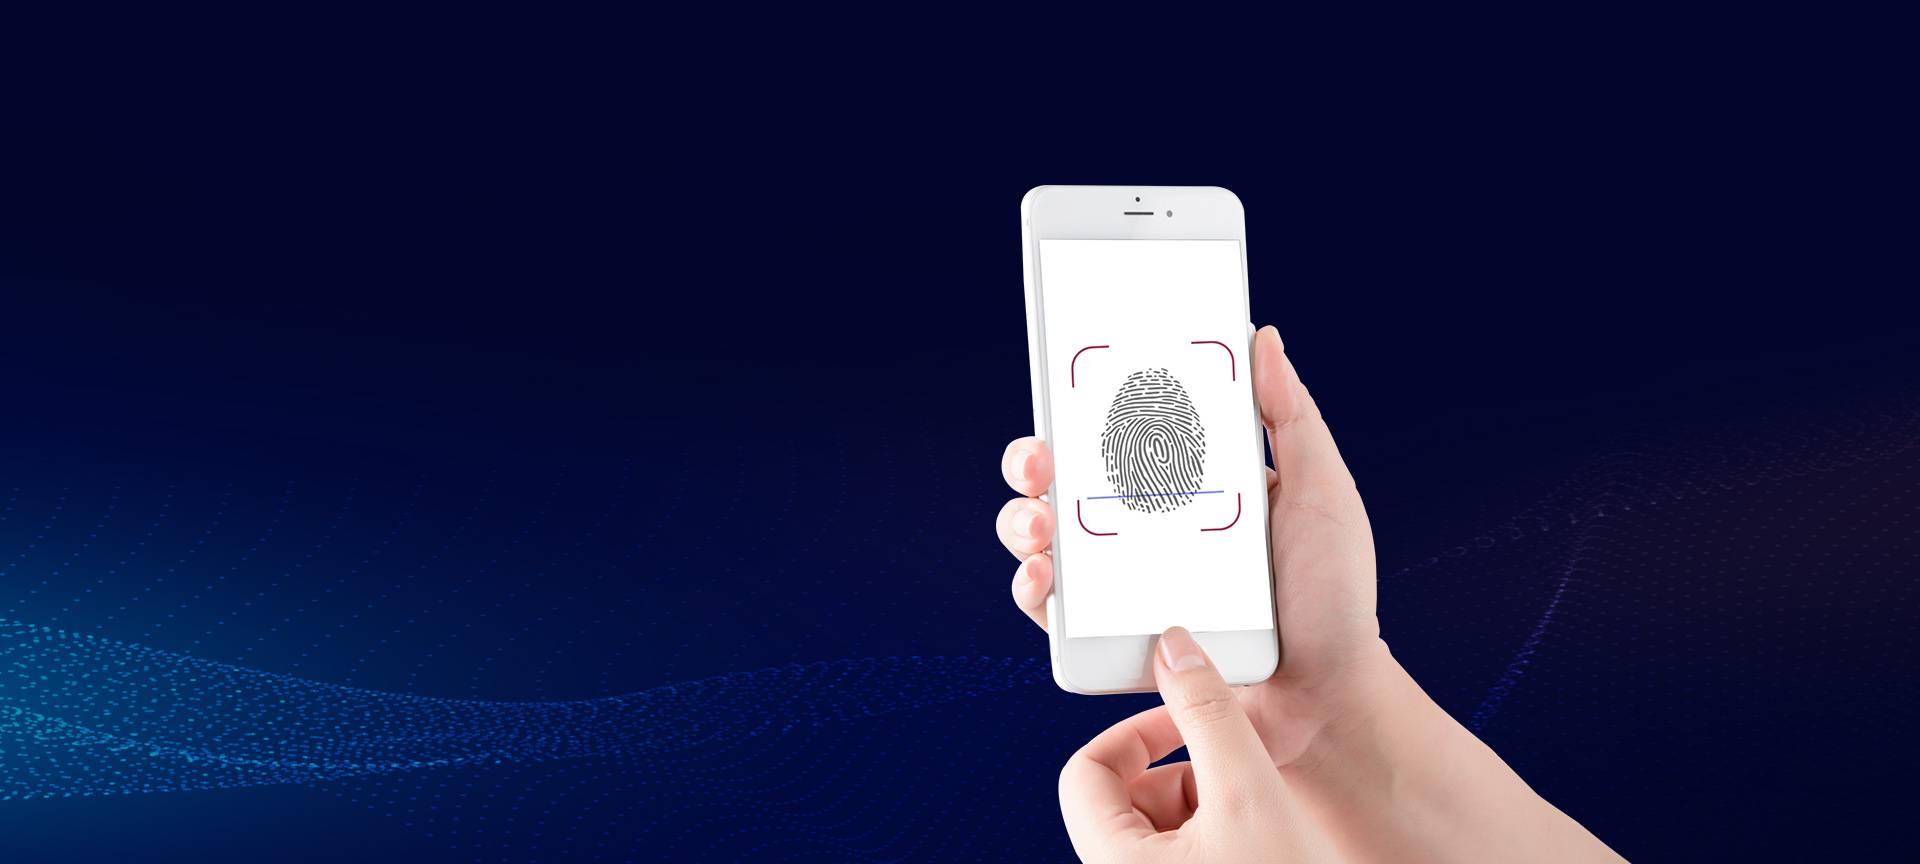 Fingerprint identification module products